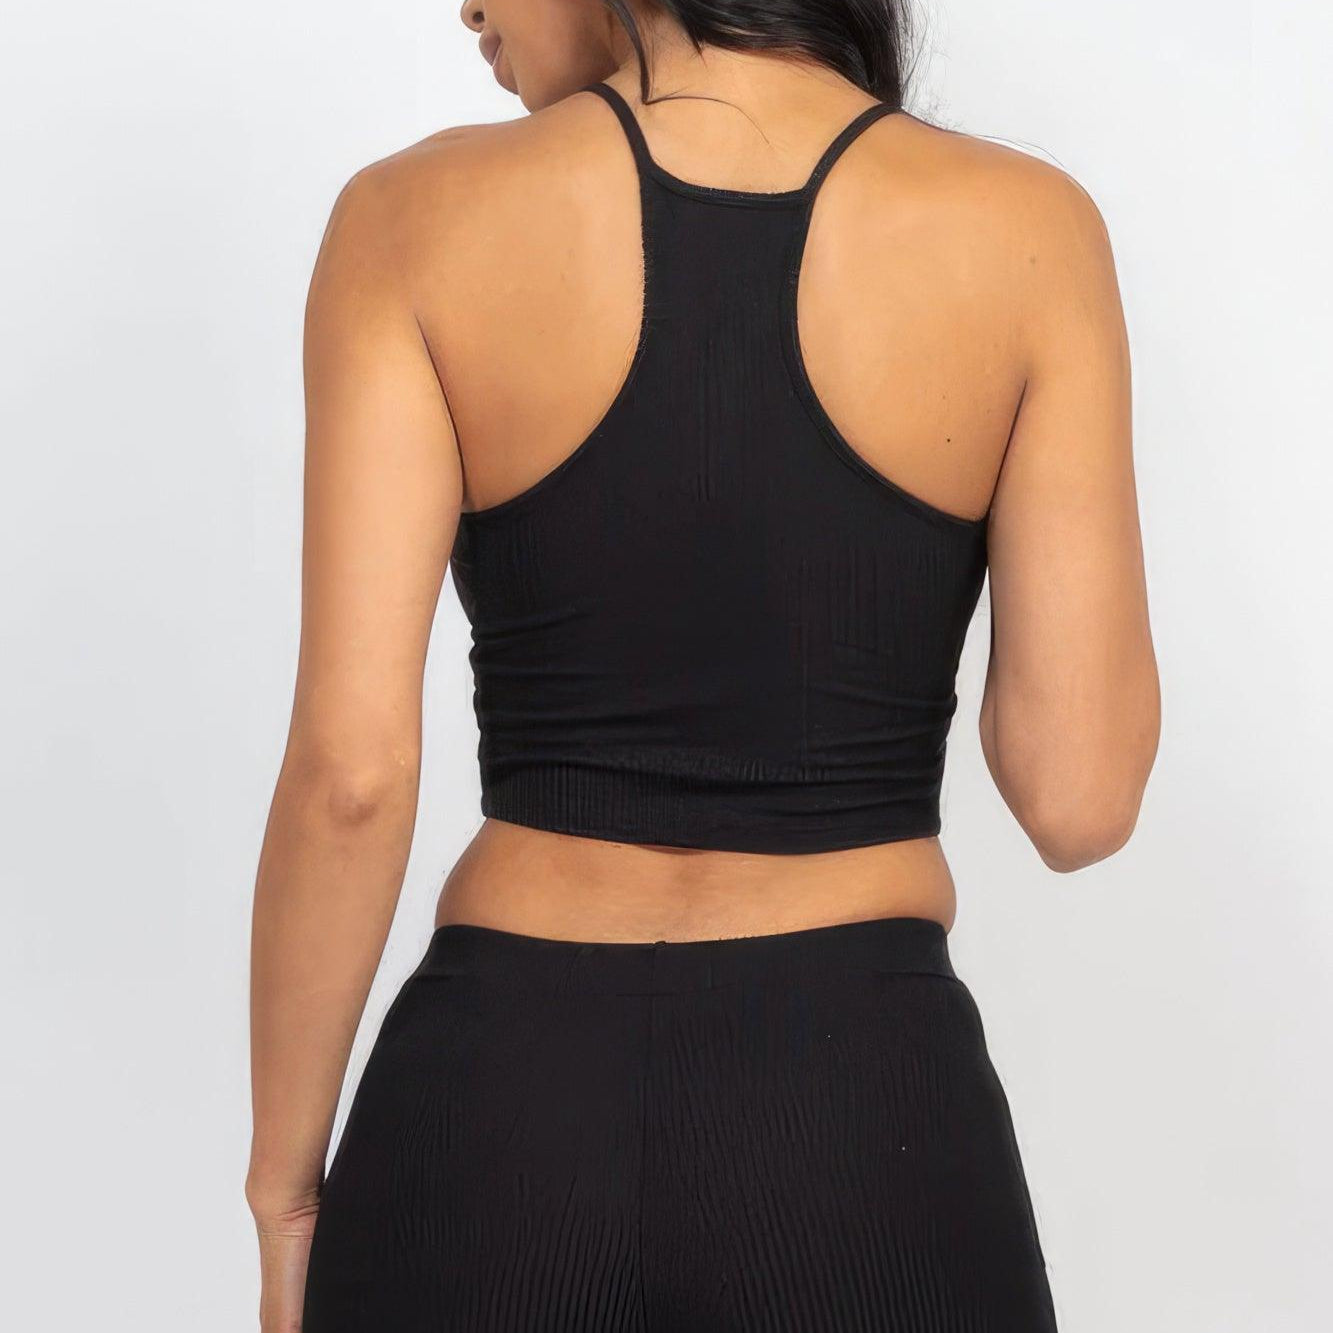 Women's Sleepwear/Loungewear Ribbed Crop Cami Top & Shorts Set